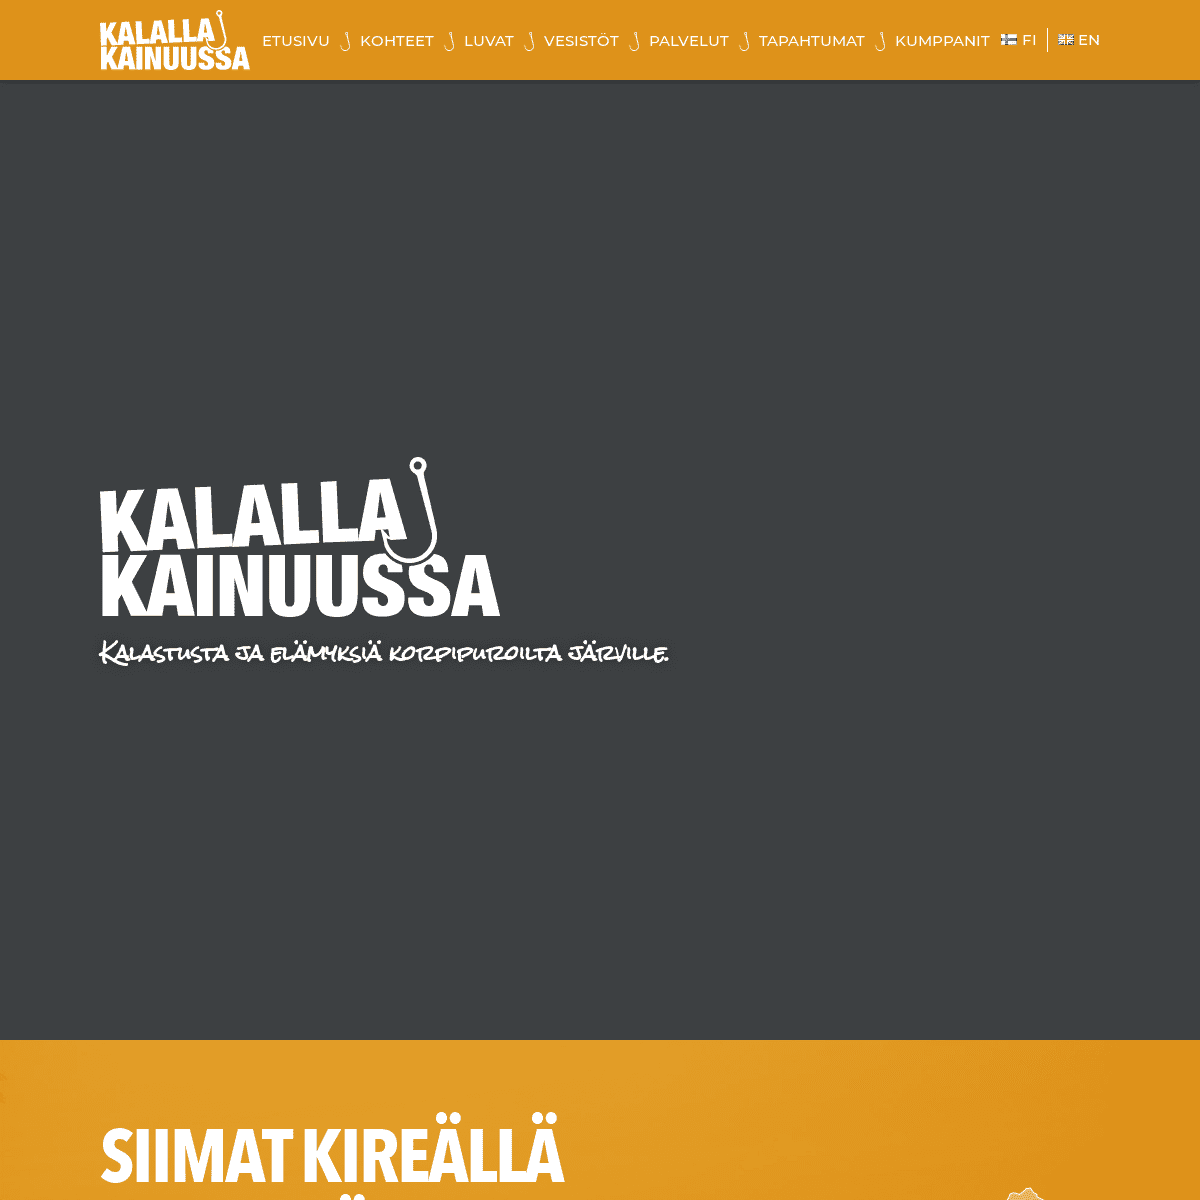 A complete backup of kalallakainuussa.fi